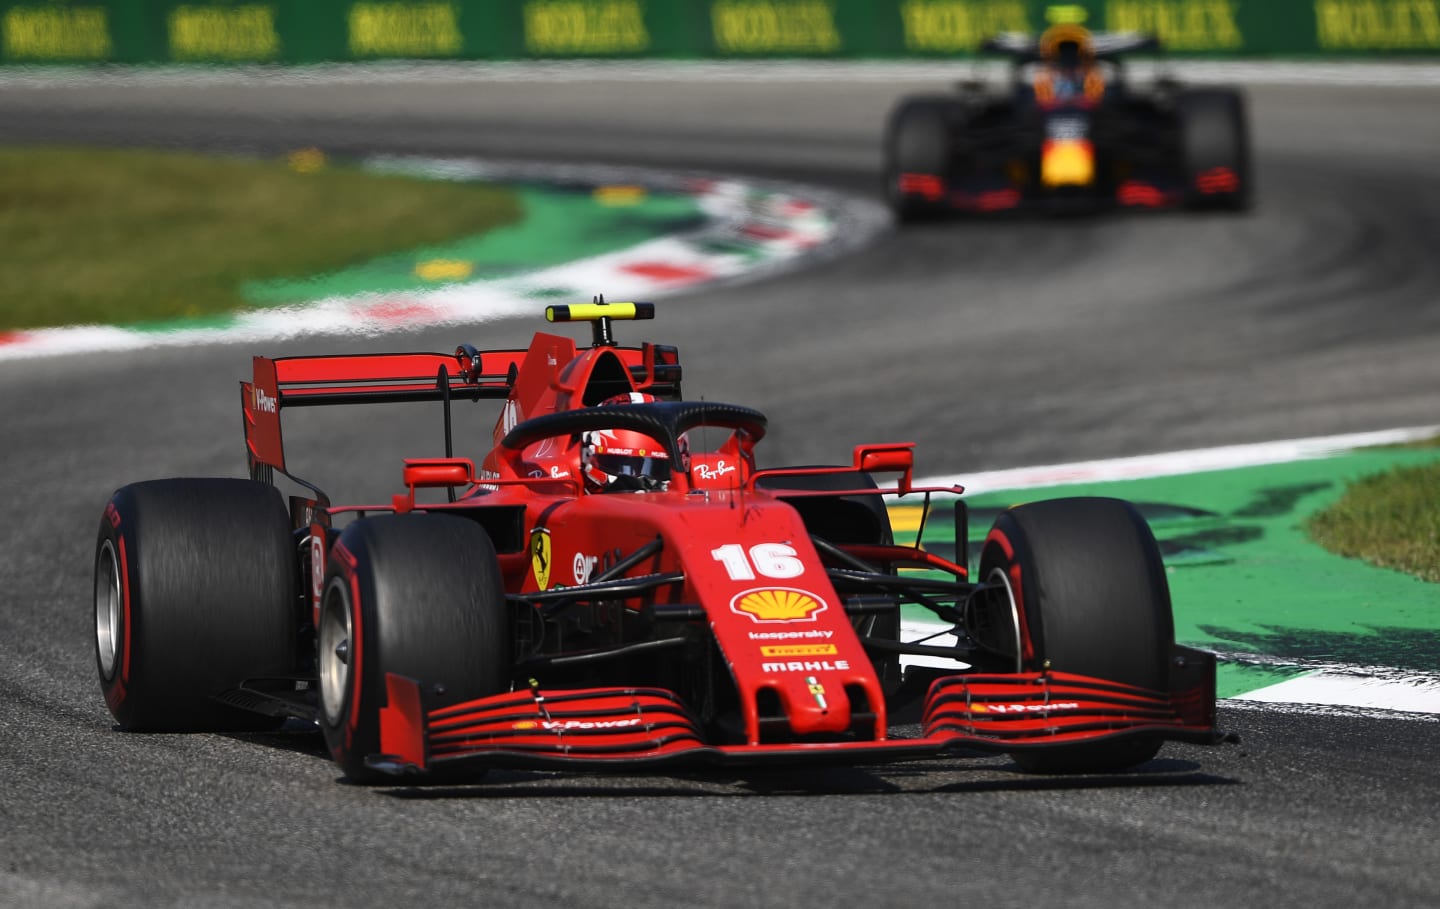 MONZA, ITALY - SEPTEMBER 06: Charles Leclerc of Monaco driving the (16) Scuderia Ferrari SF1000 on